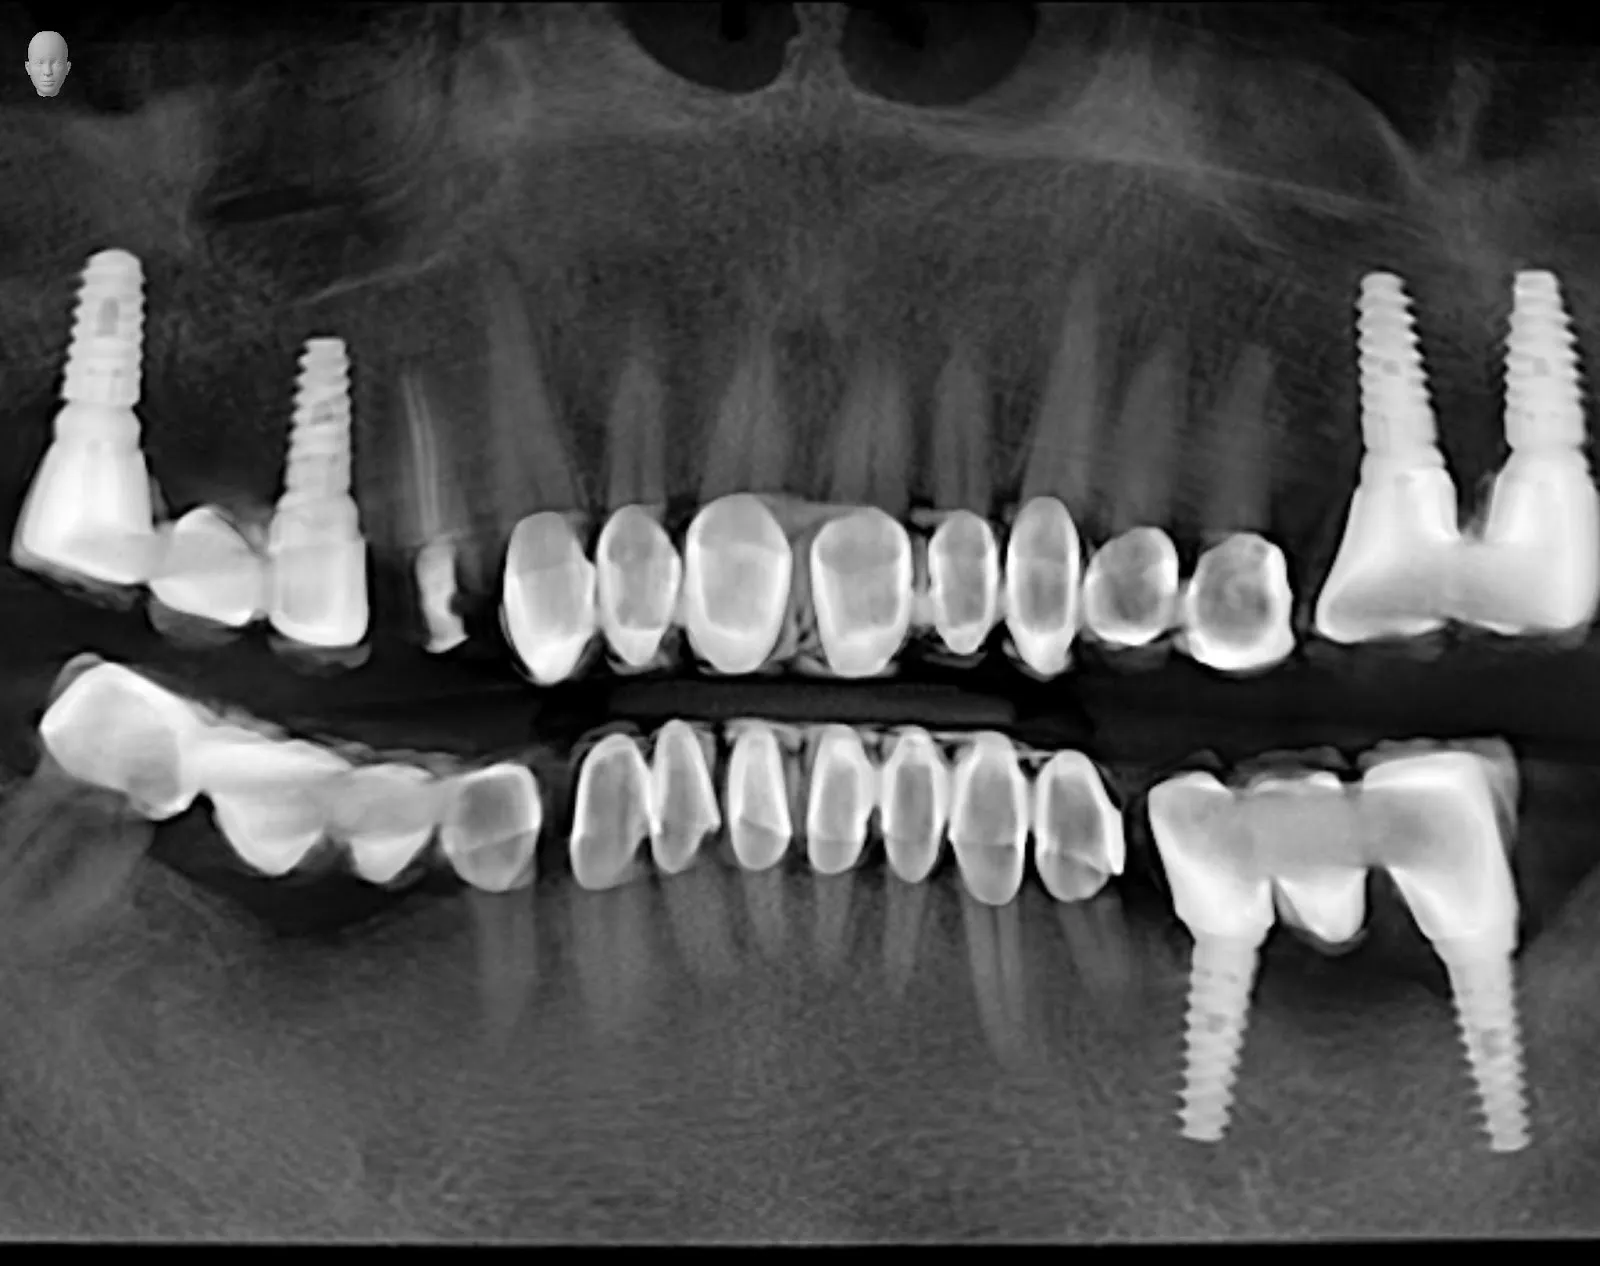 Myra Dental Centre Turkey - needs-to-know-about-dental-implants-in-turkey